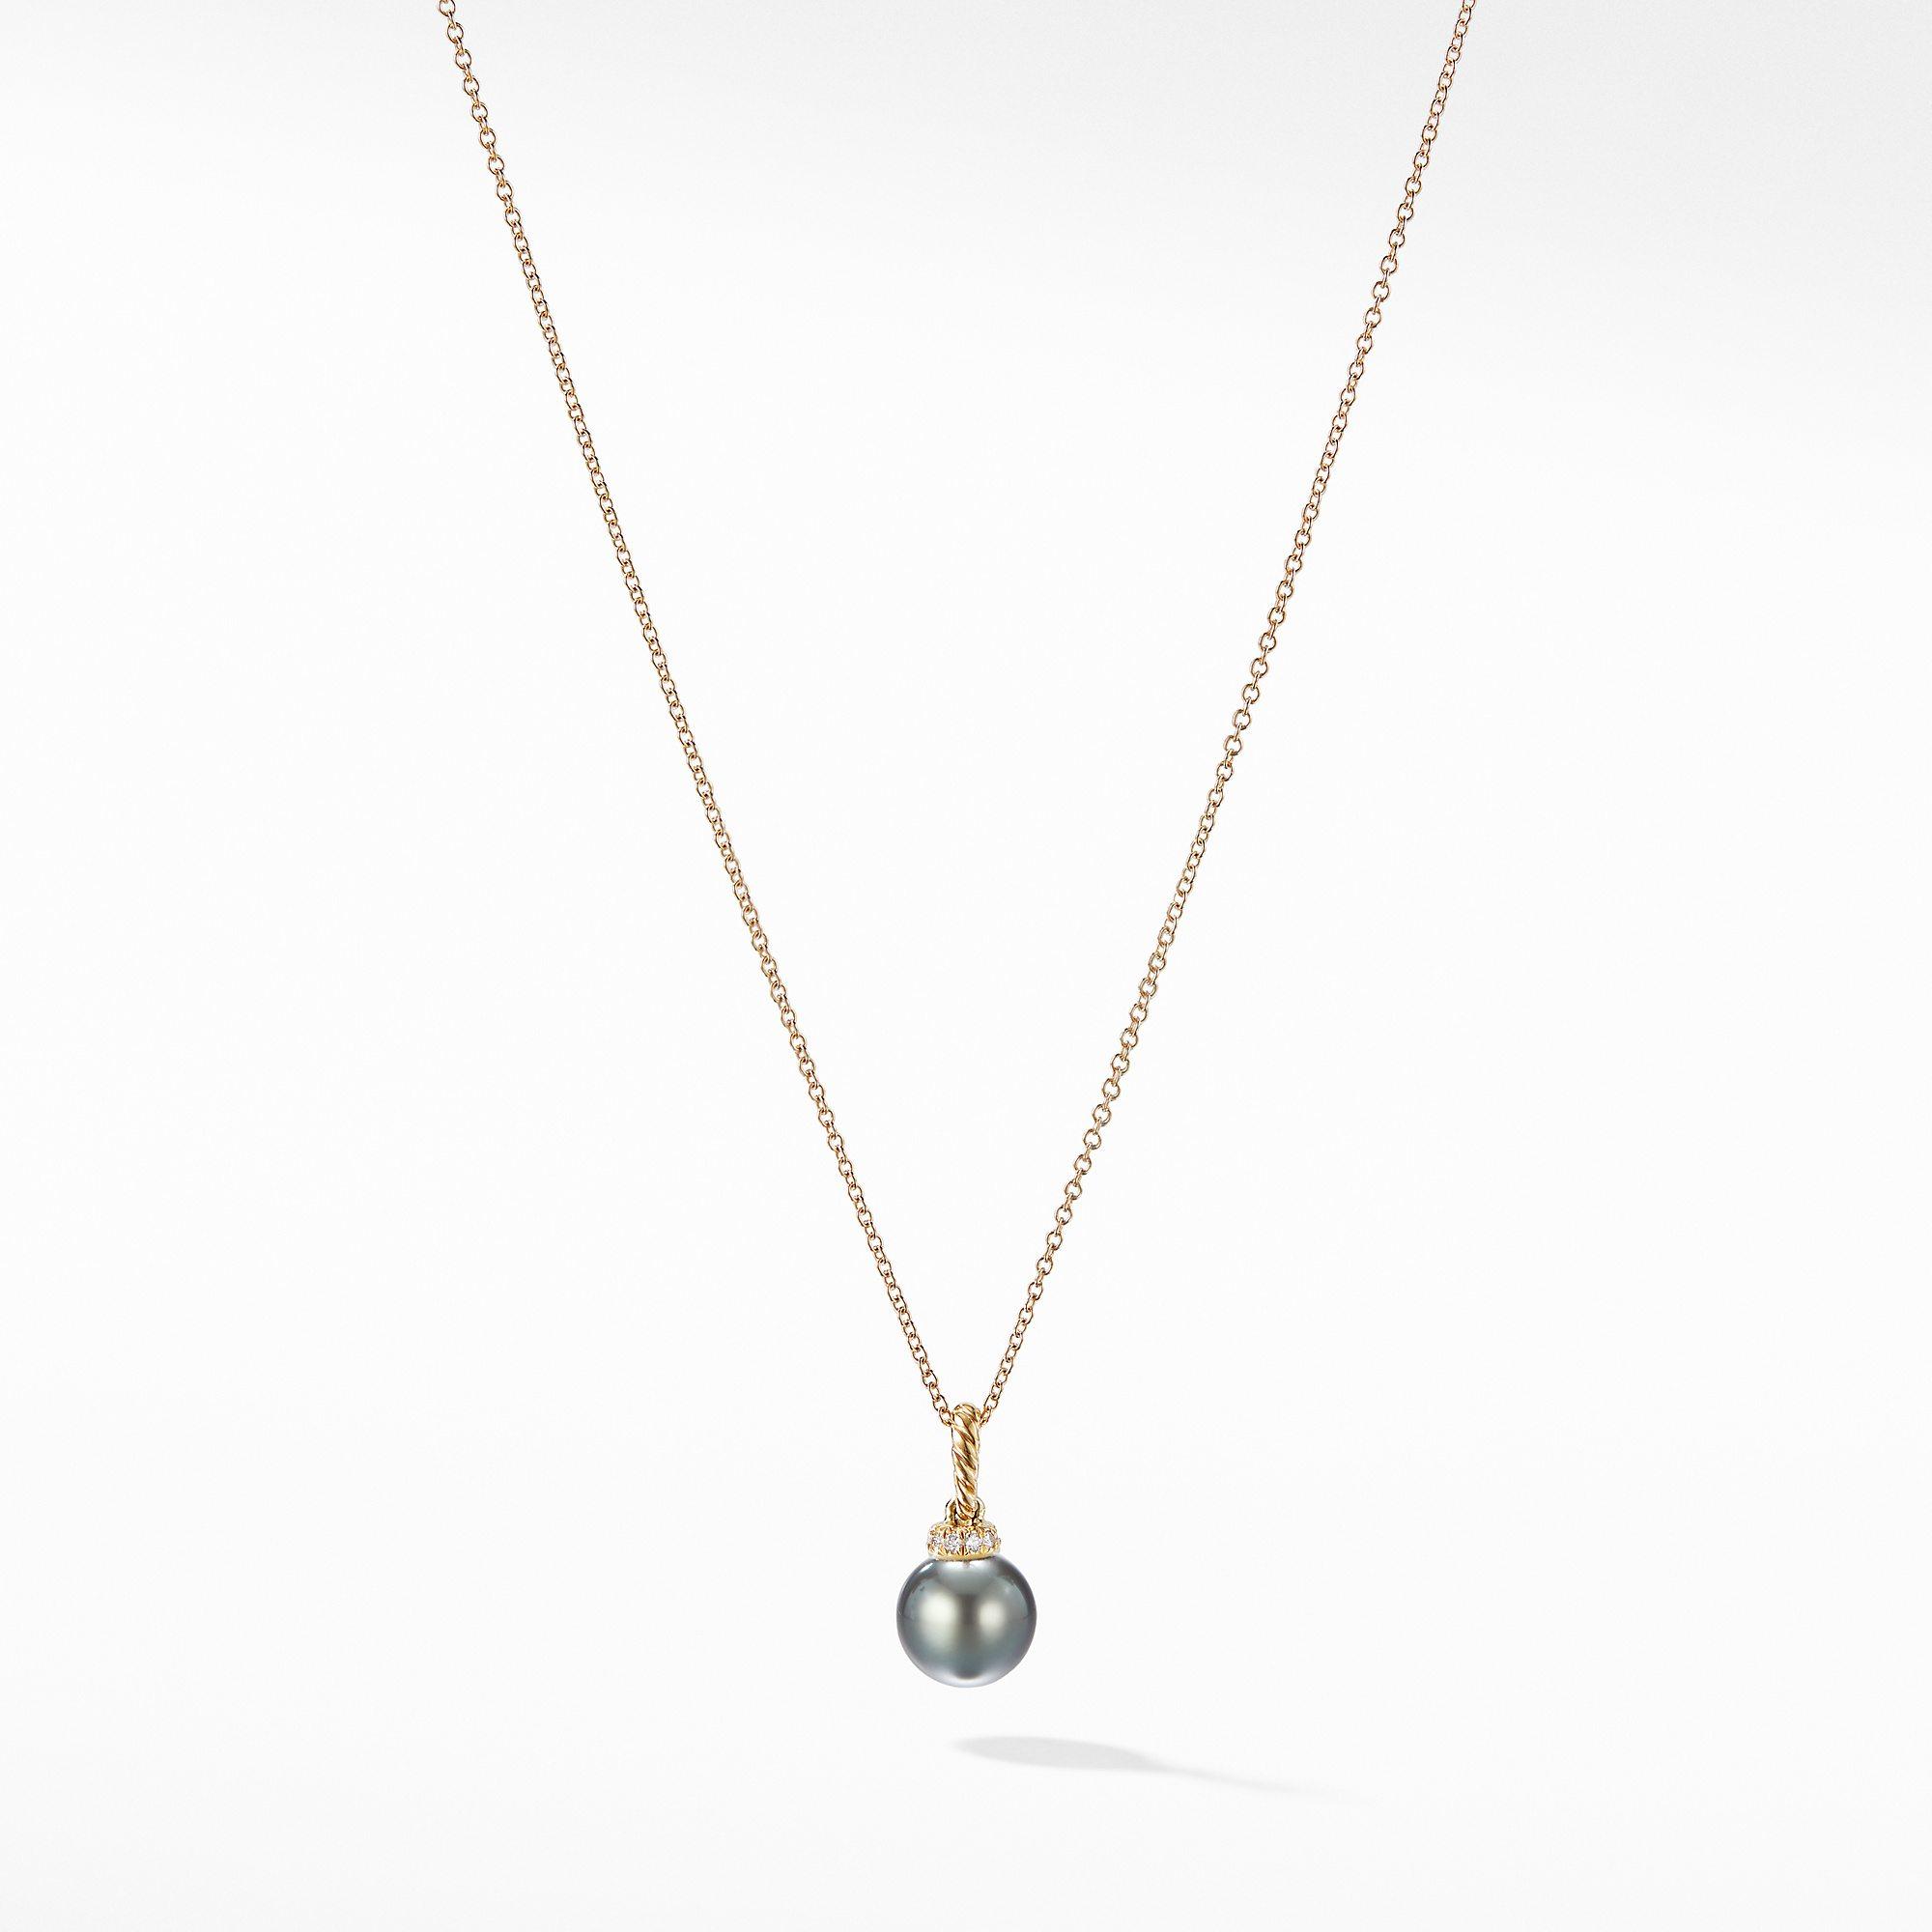 David Yurman Solari Pendant Necklace with Diamonds in 18k Gold with Grey Pearl